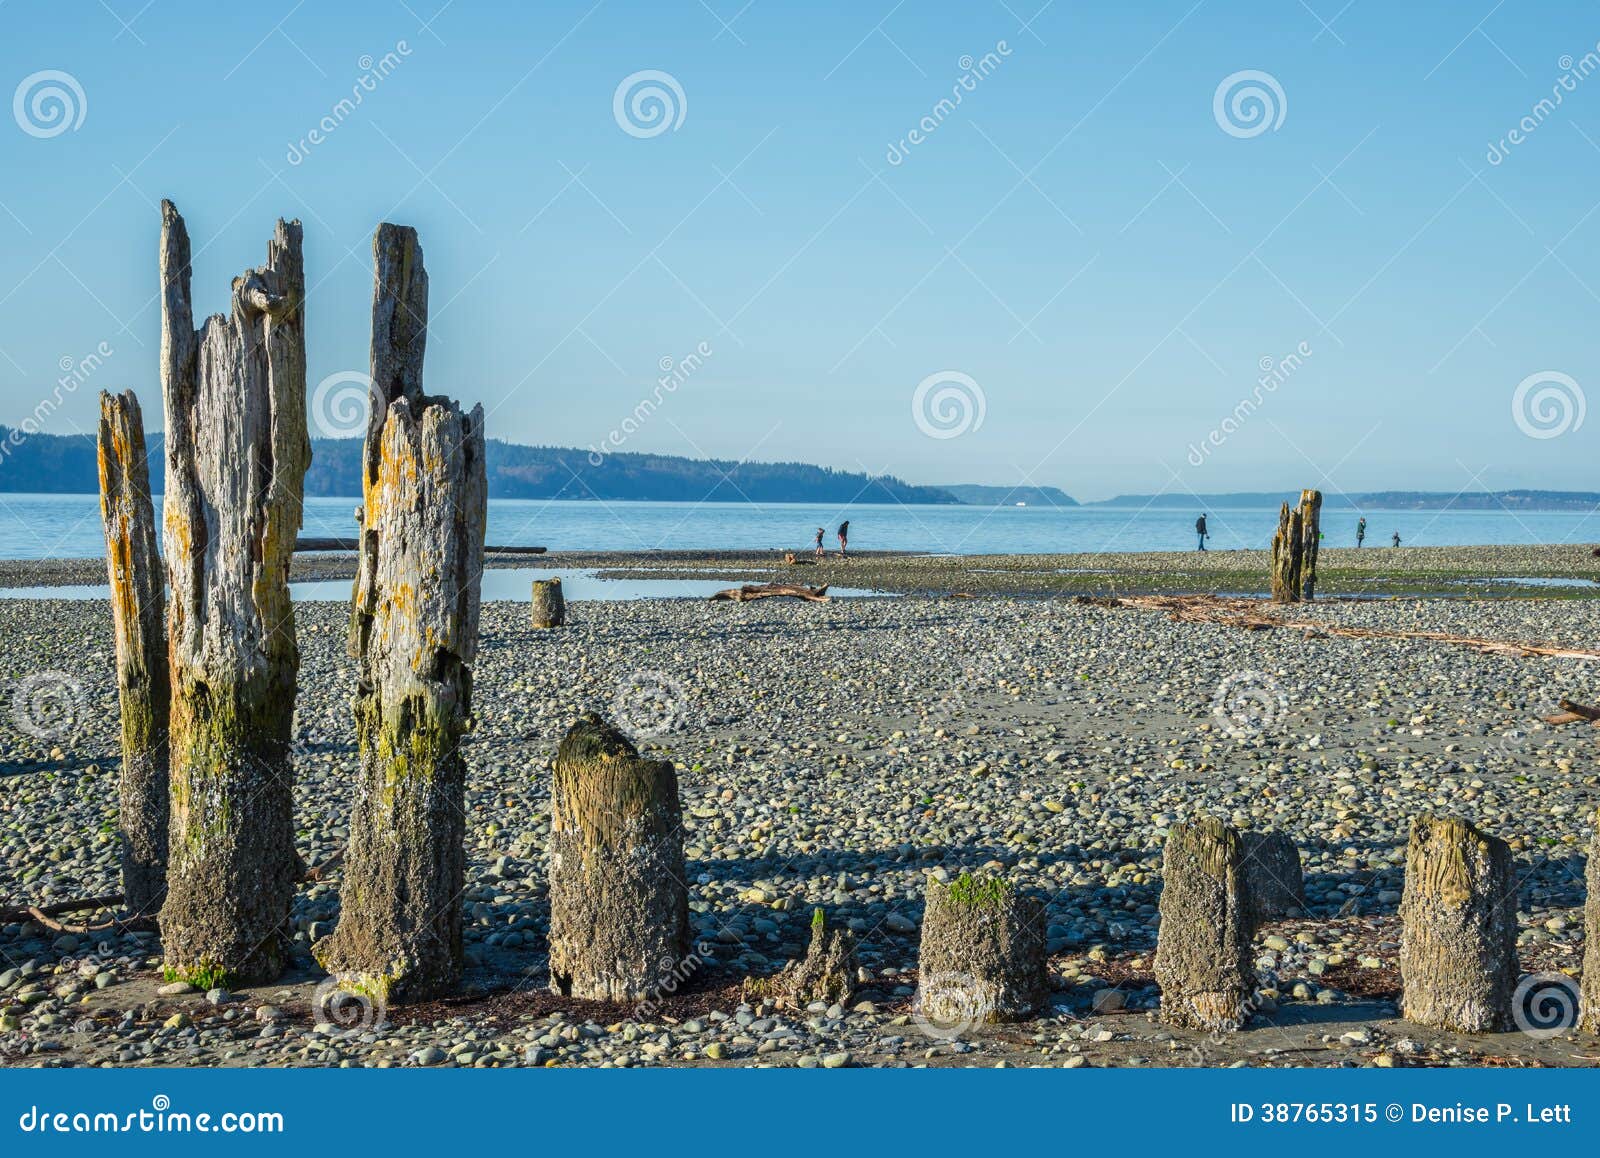 old pilings on stony beach